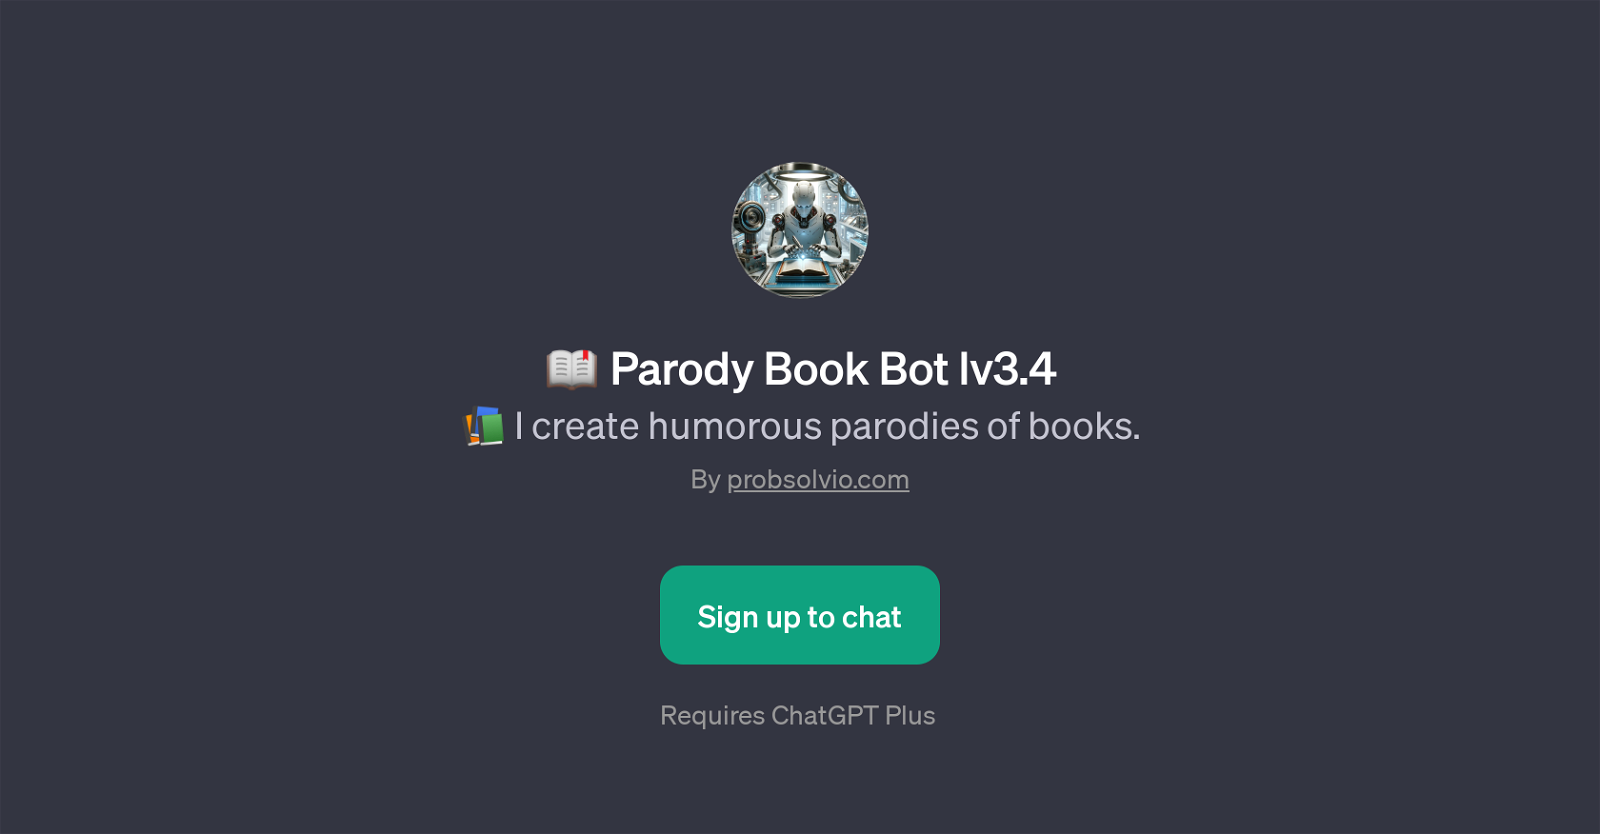 Parody Book Bot lv3.4 website